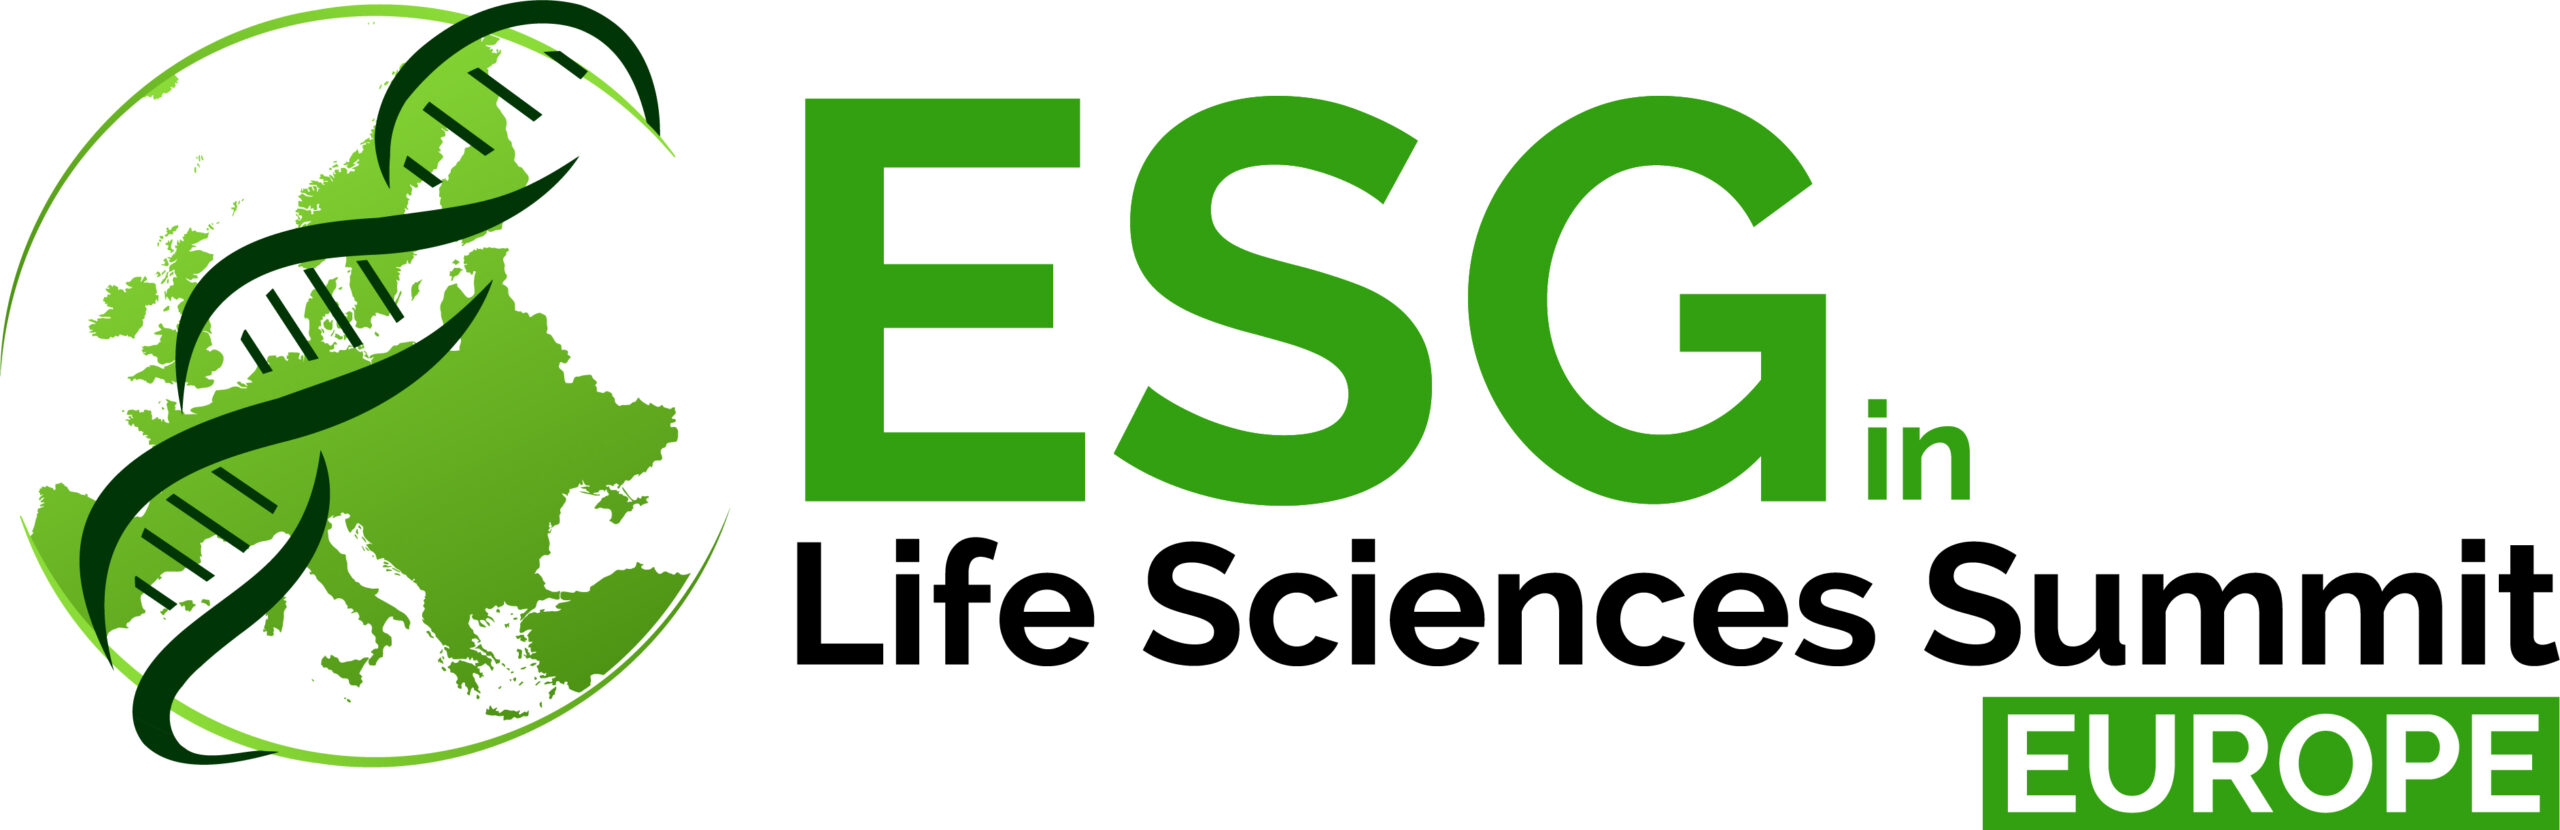 HW240210 54383 ESG in Life Sciences Europe Summit logo COL